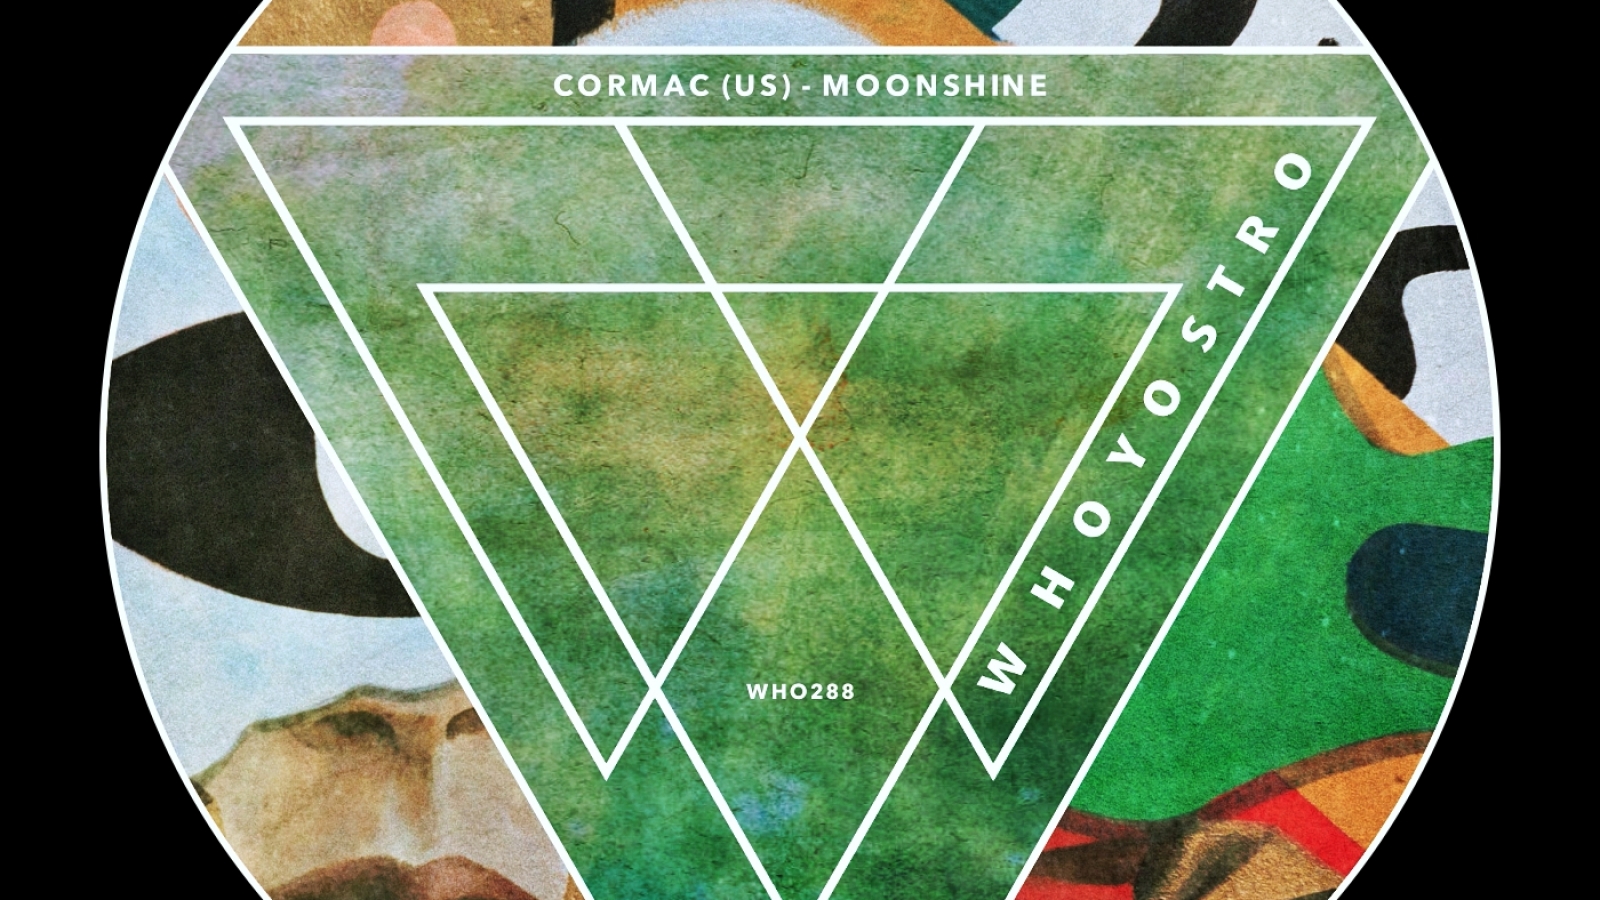 WHO288 Cover CORMAC (US) - Moonshine - Whoyostro